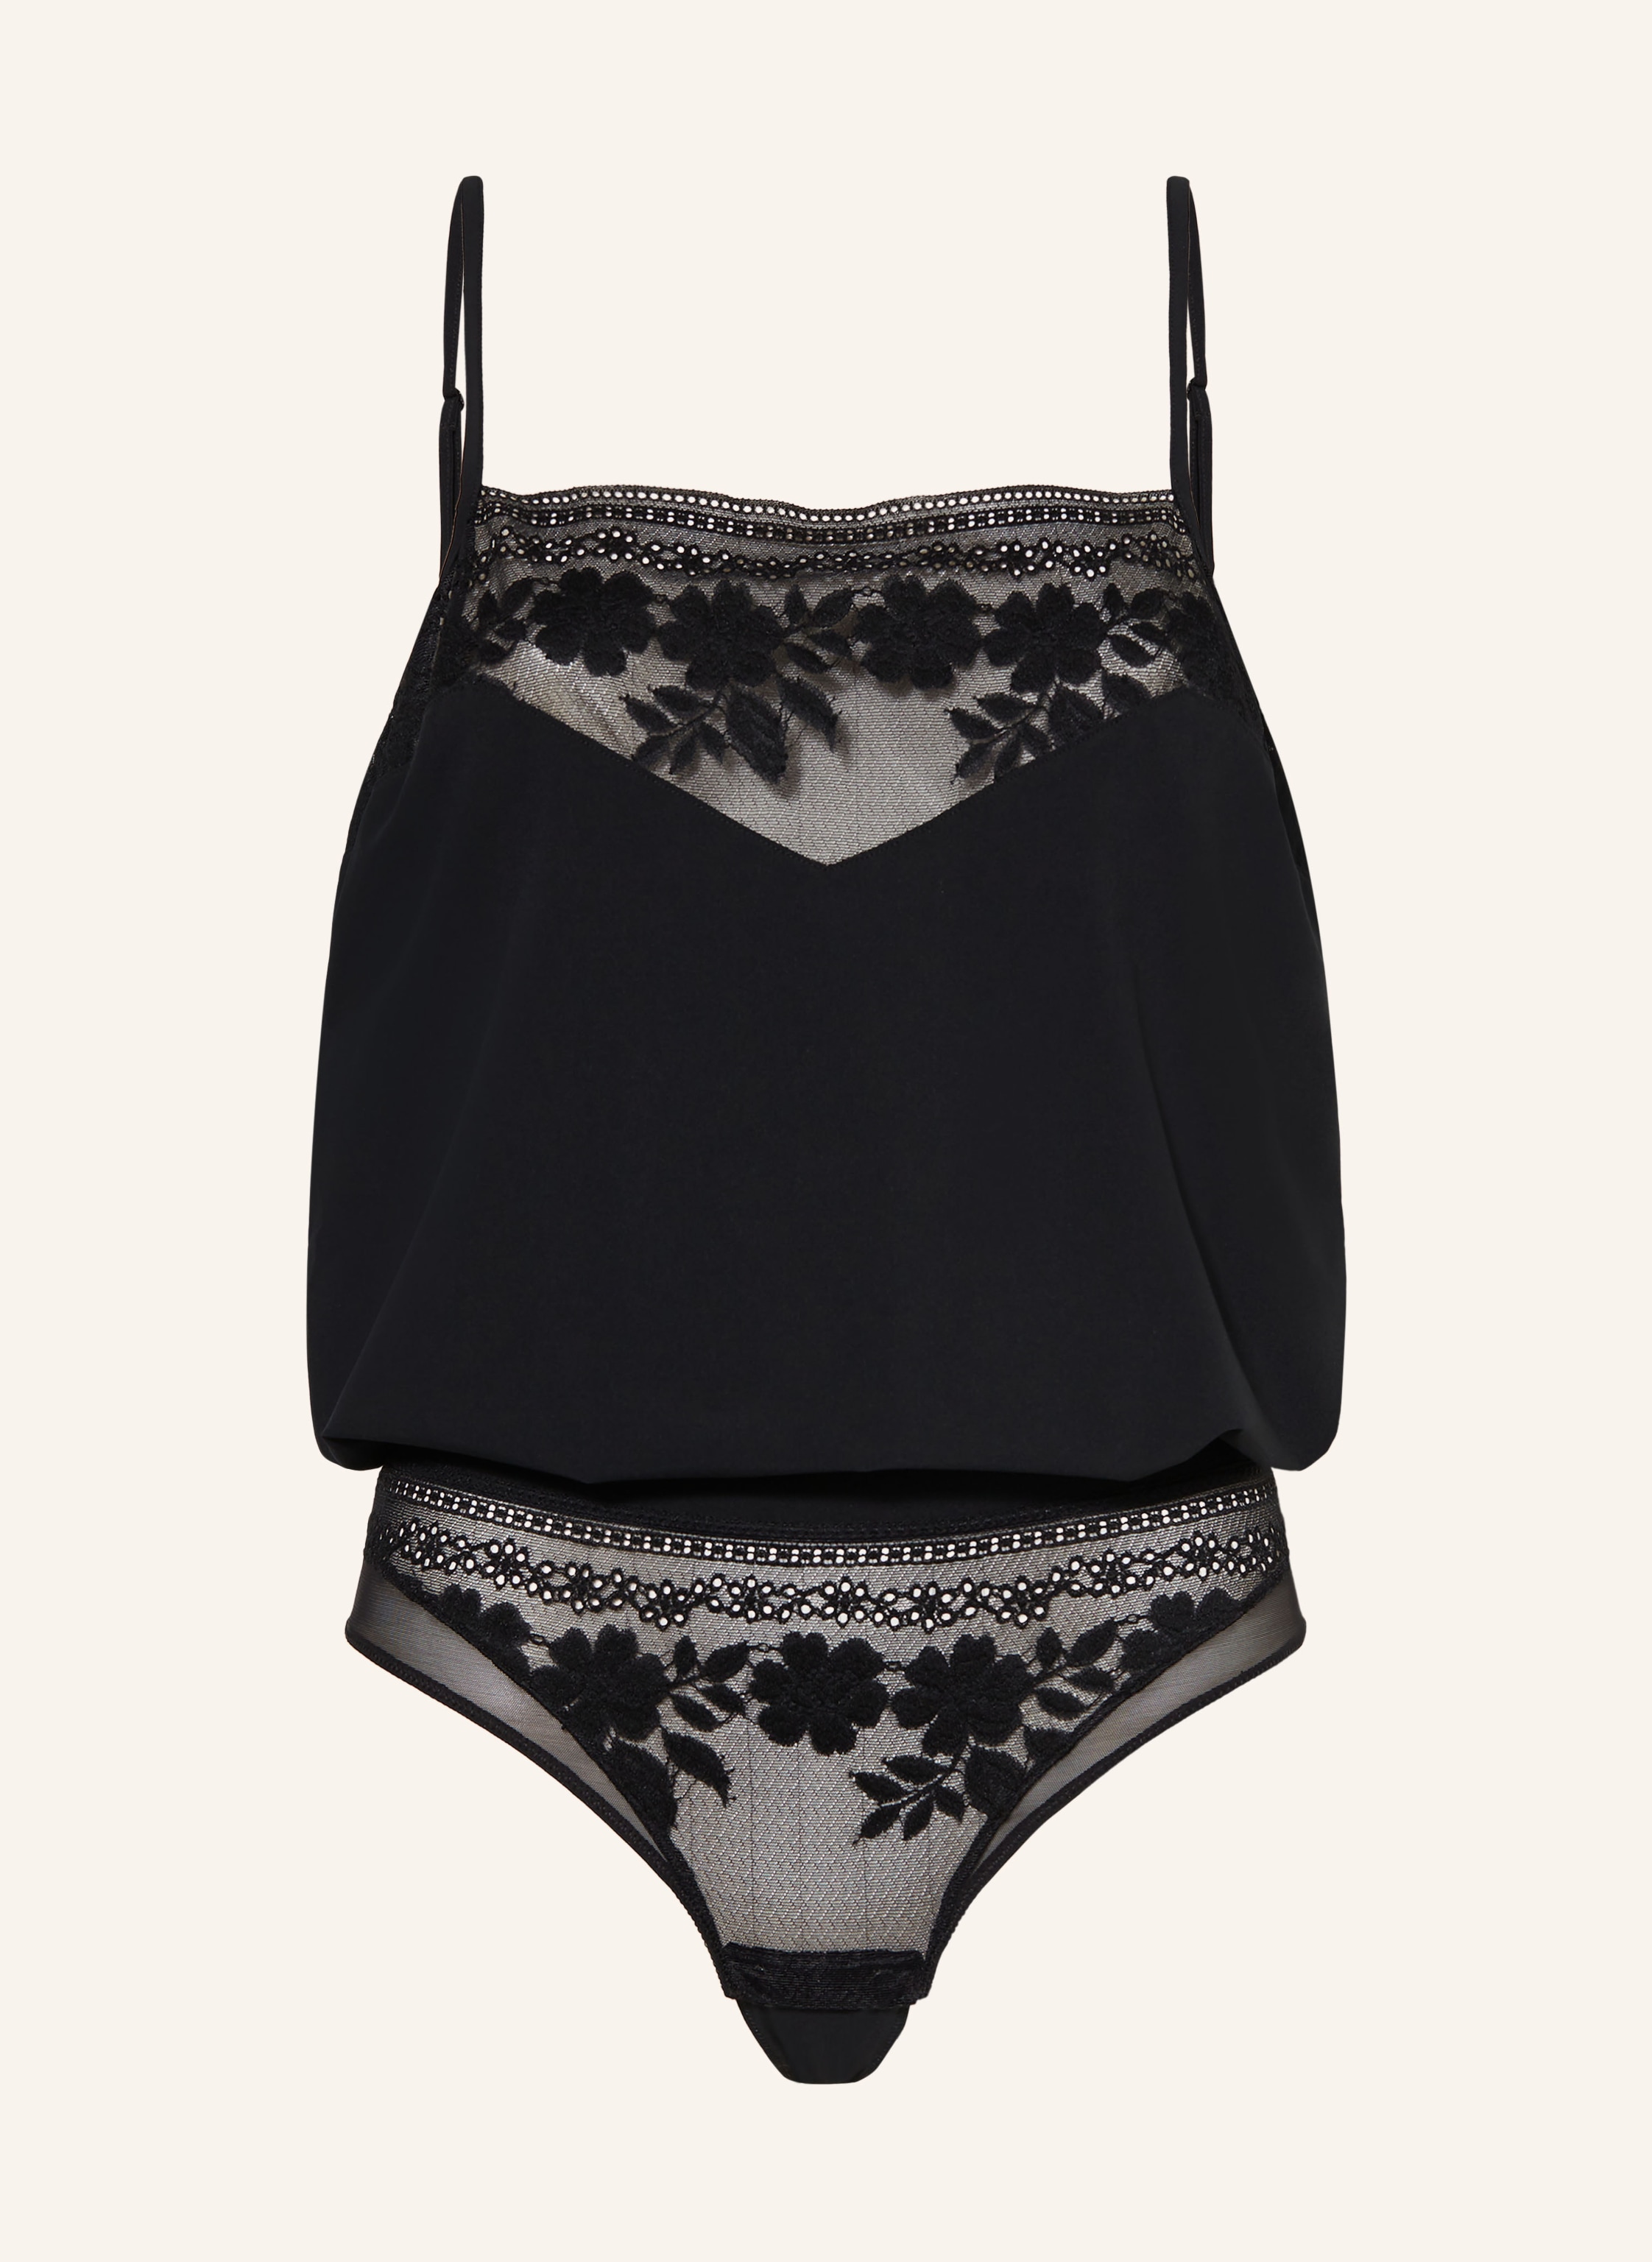 Simone Perele Wish Embroidered Black Tanga Thong L11141 Size XS (1